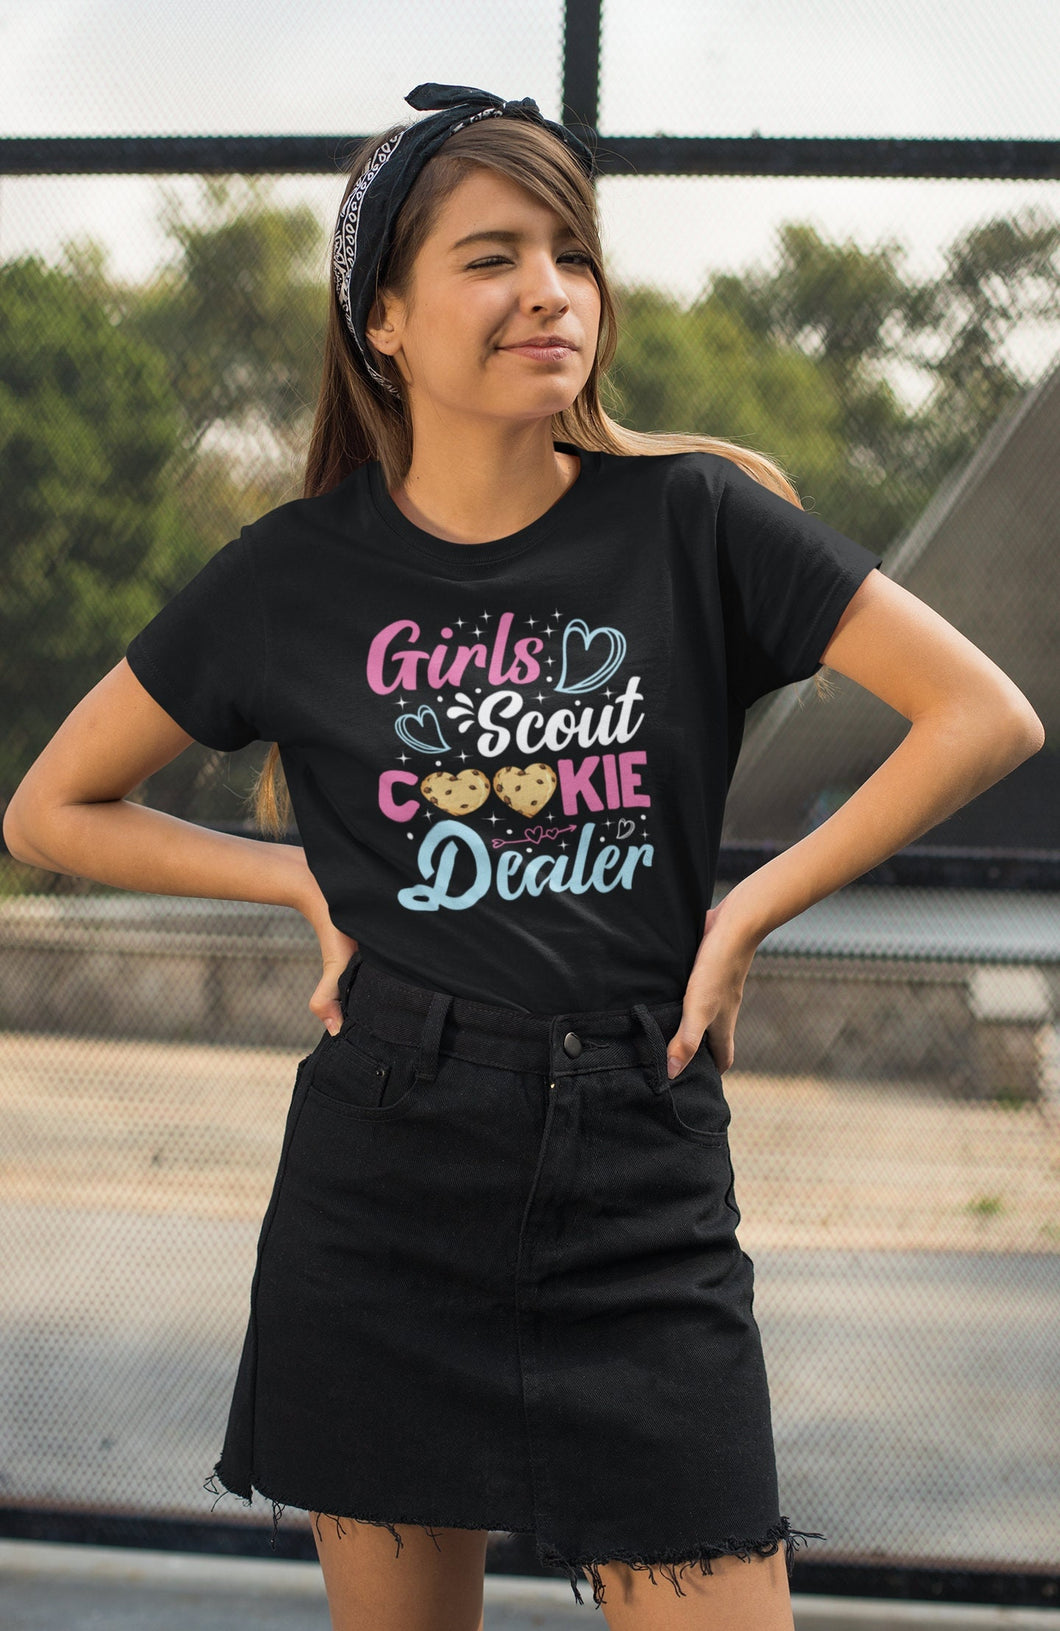 Scout For Girls Cookie Dealer Shirt, Girl Cookie Seller Shirt, Bakery Owner Shirt, Scout Leader Shirt